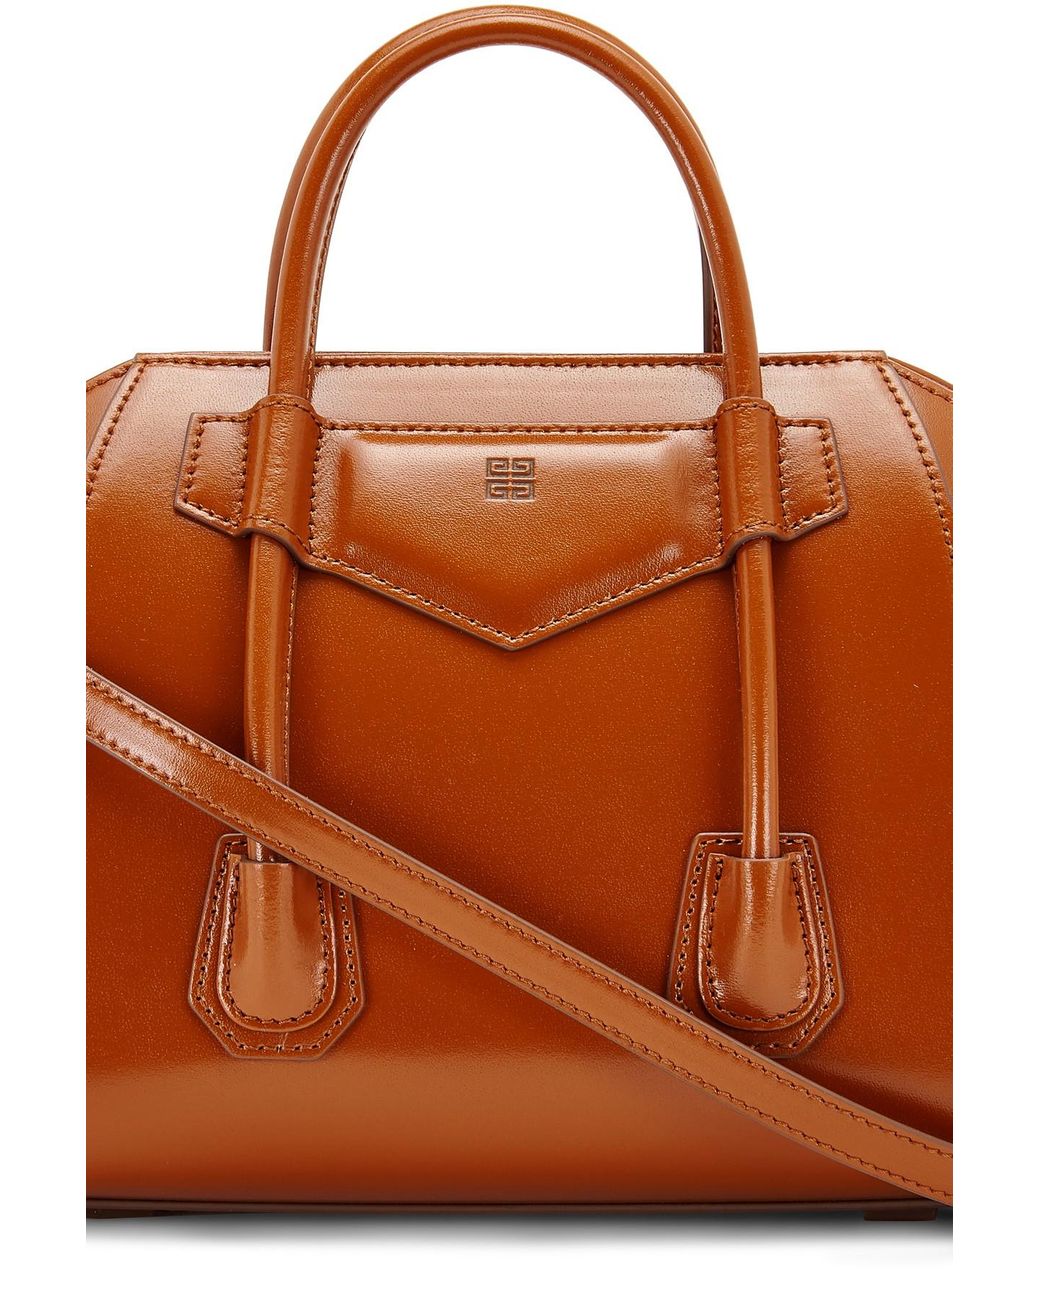 Givenchy Antigona Lock Mini Bag in Brown | Lyst